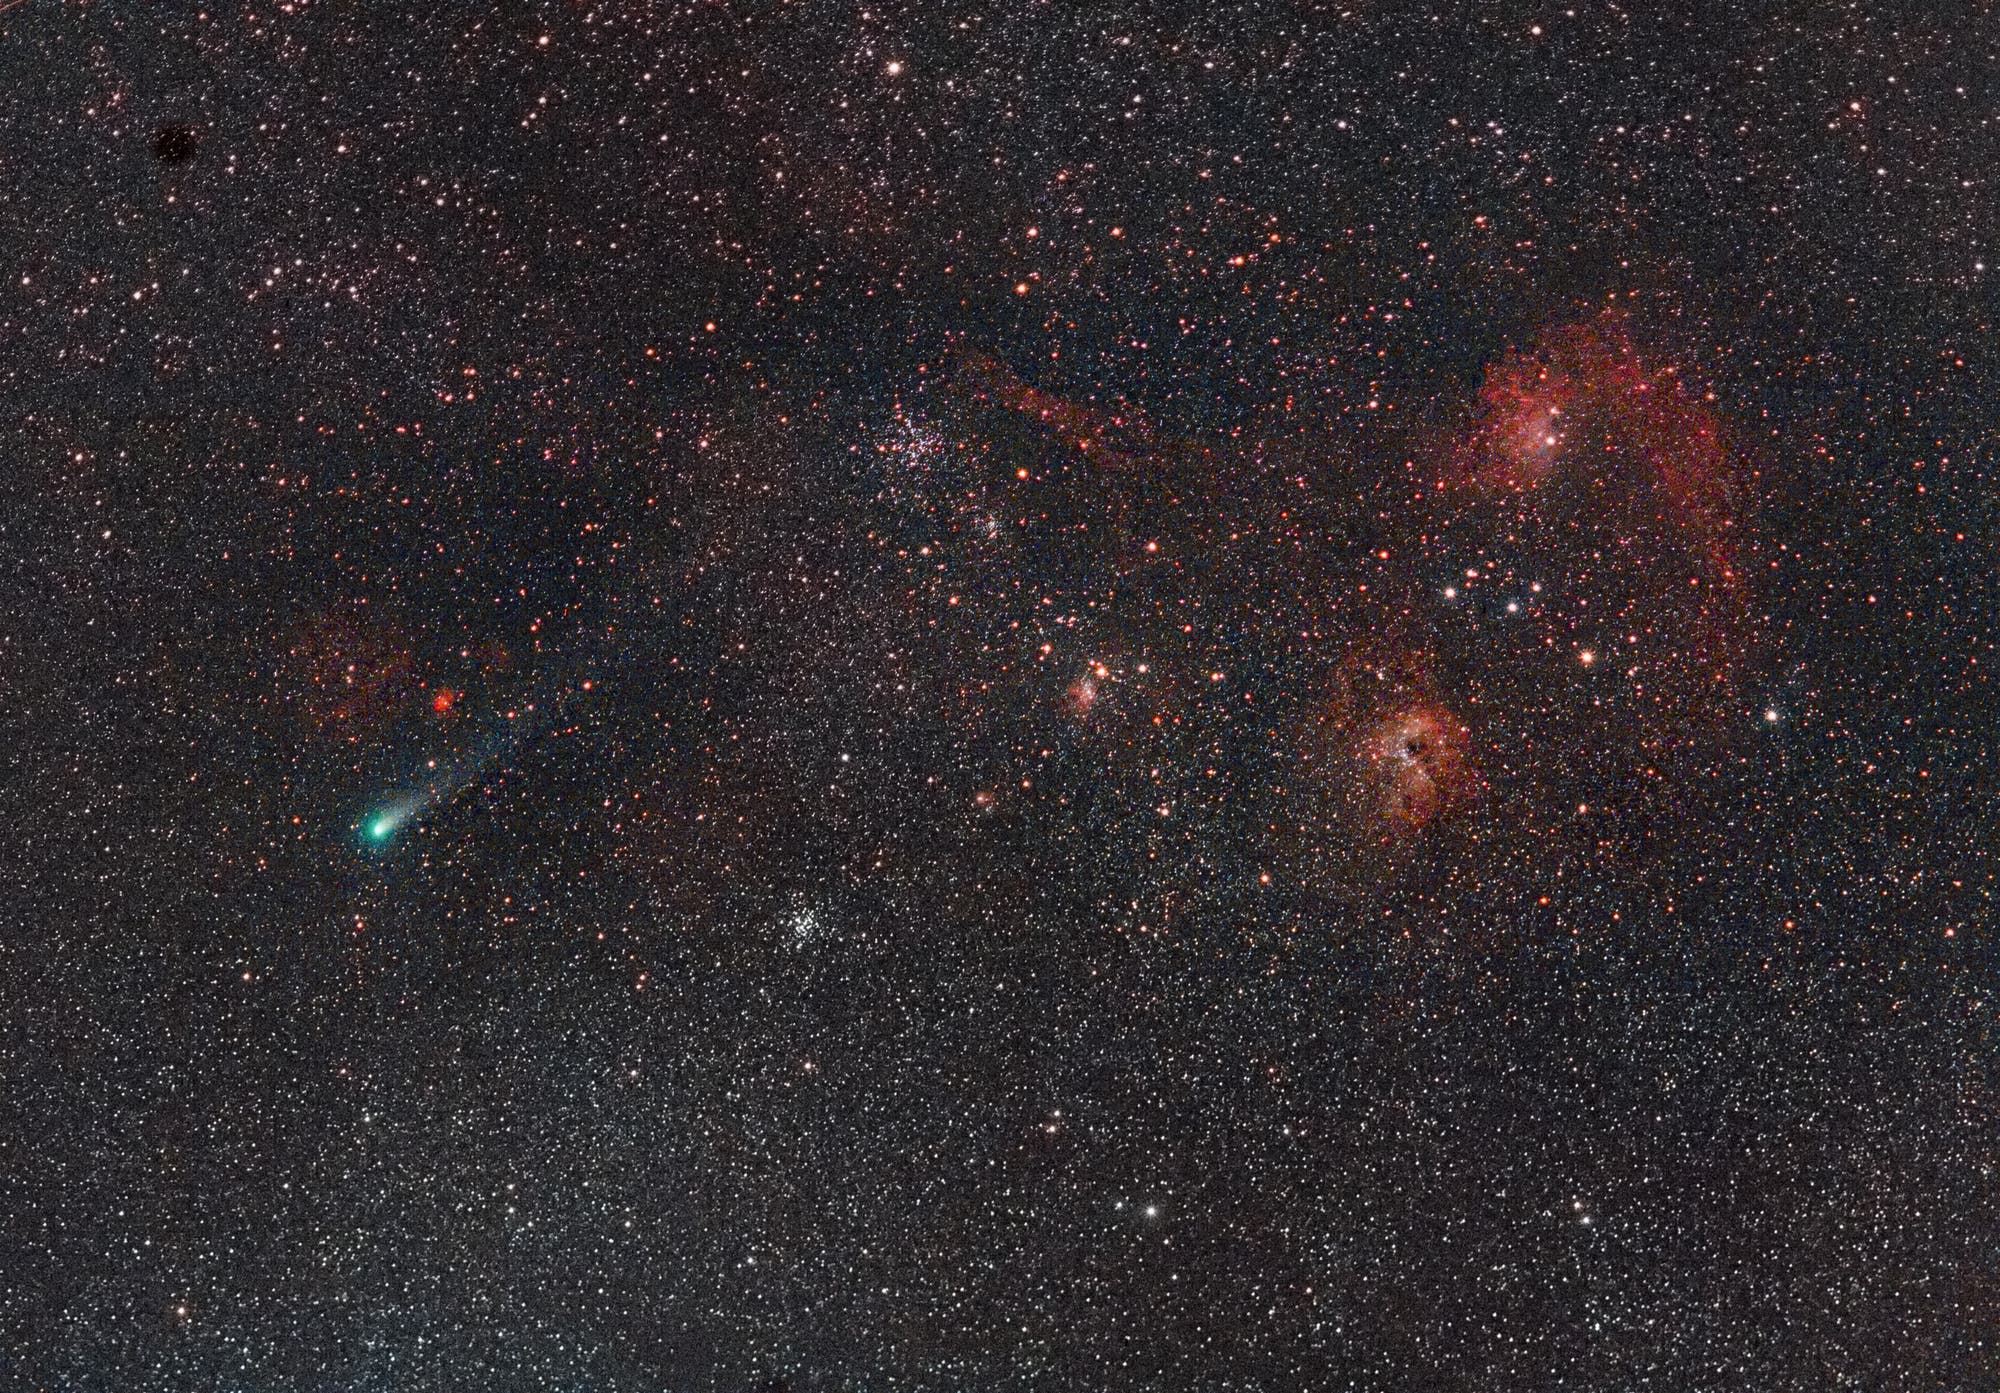 Komet 21P/Giacobini-Zinner im Sternbild Fuhrmann 